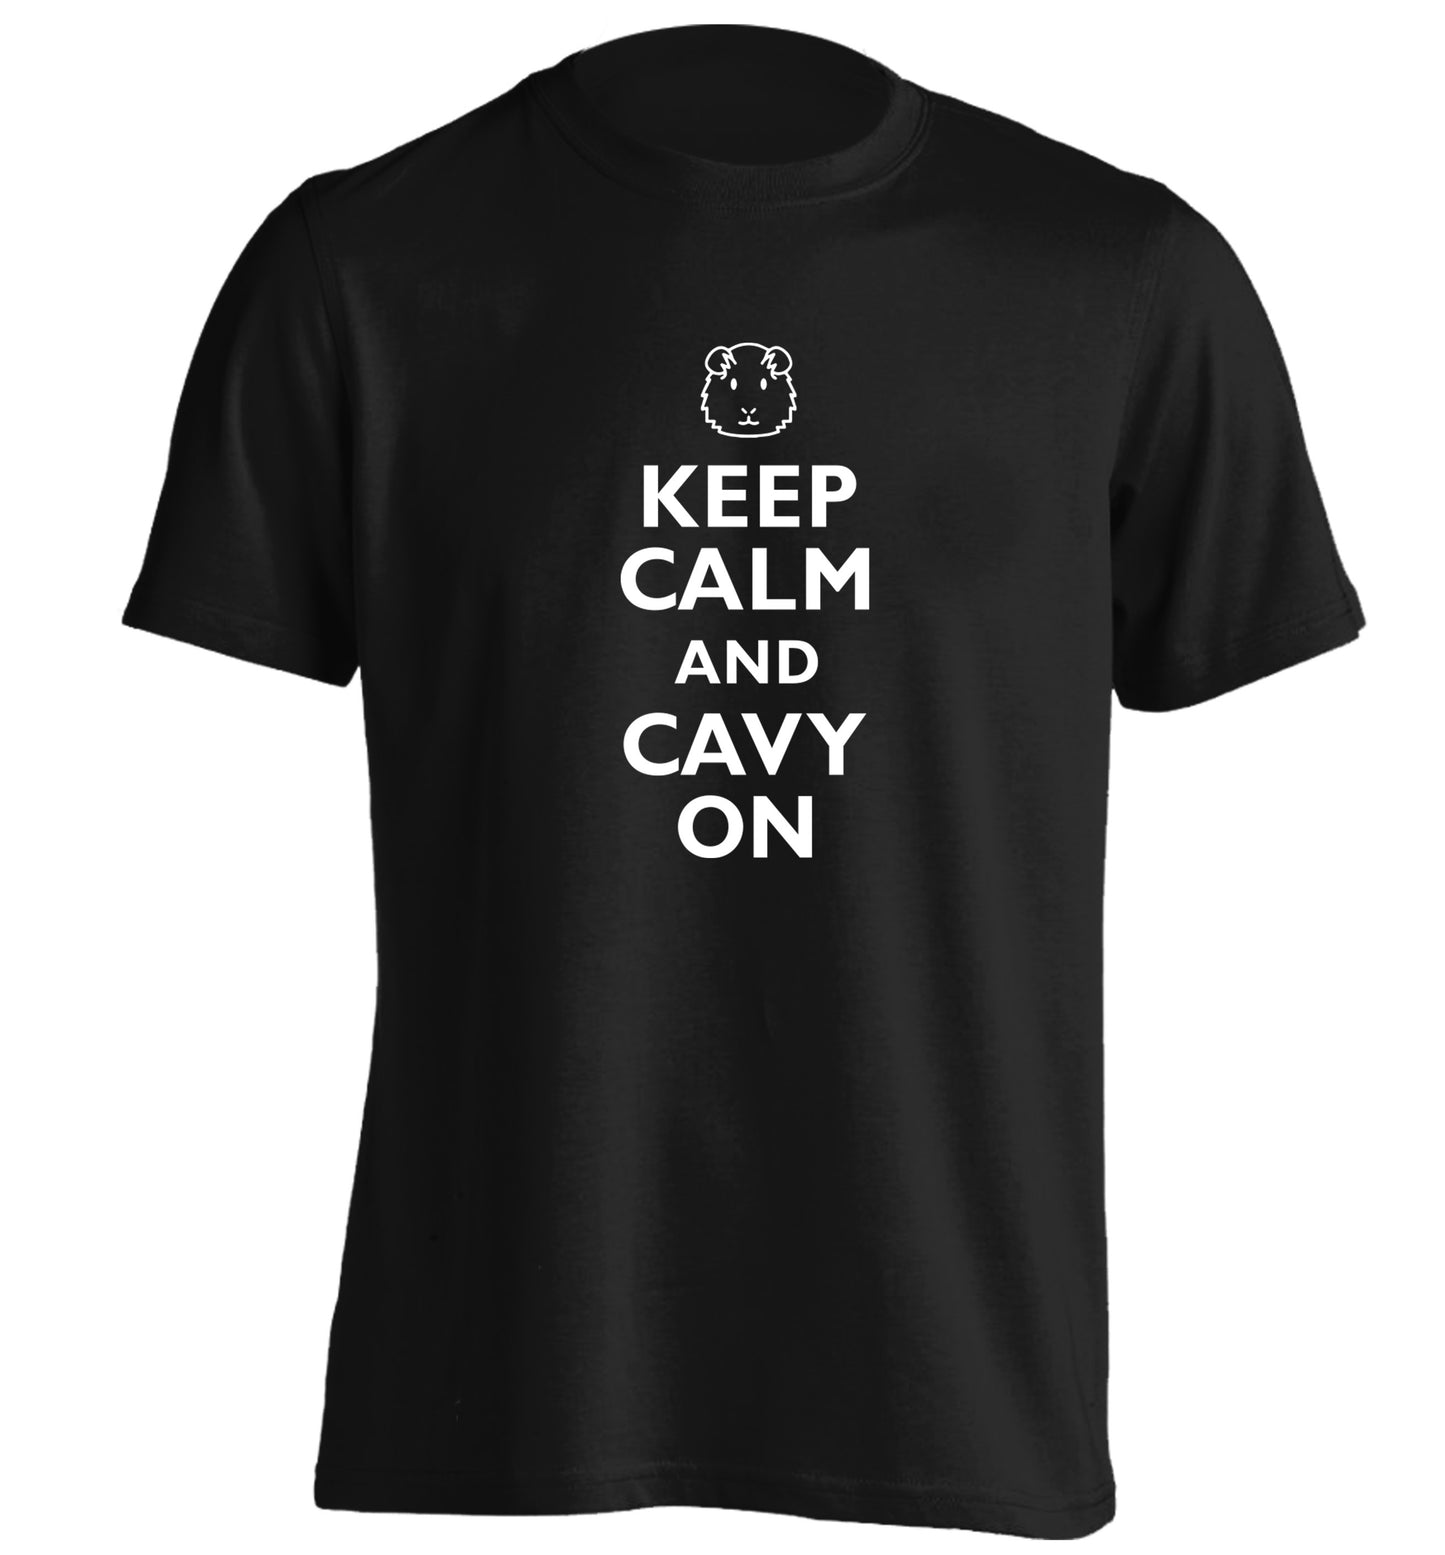 Keep calm and cavvy on adults unisex black Tshirt 2XL